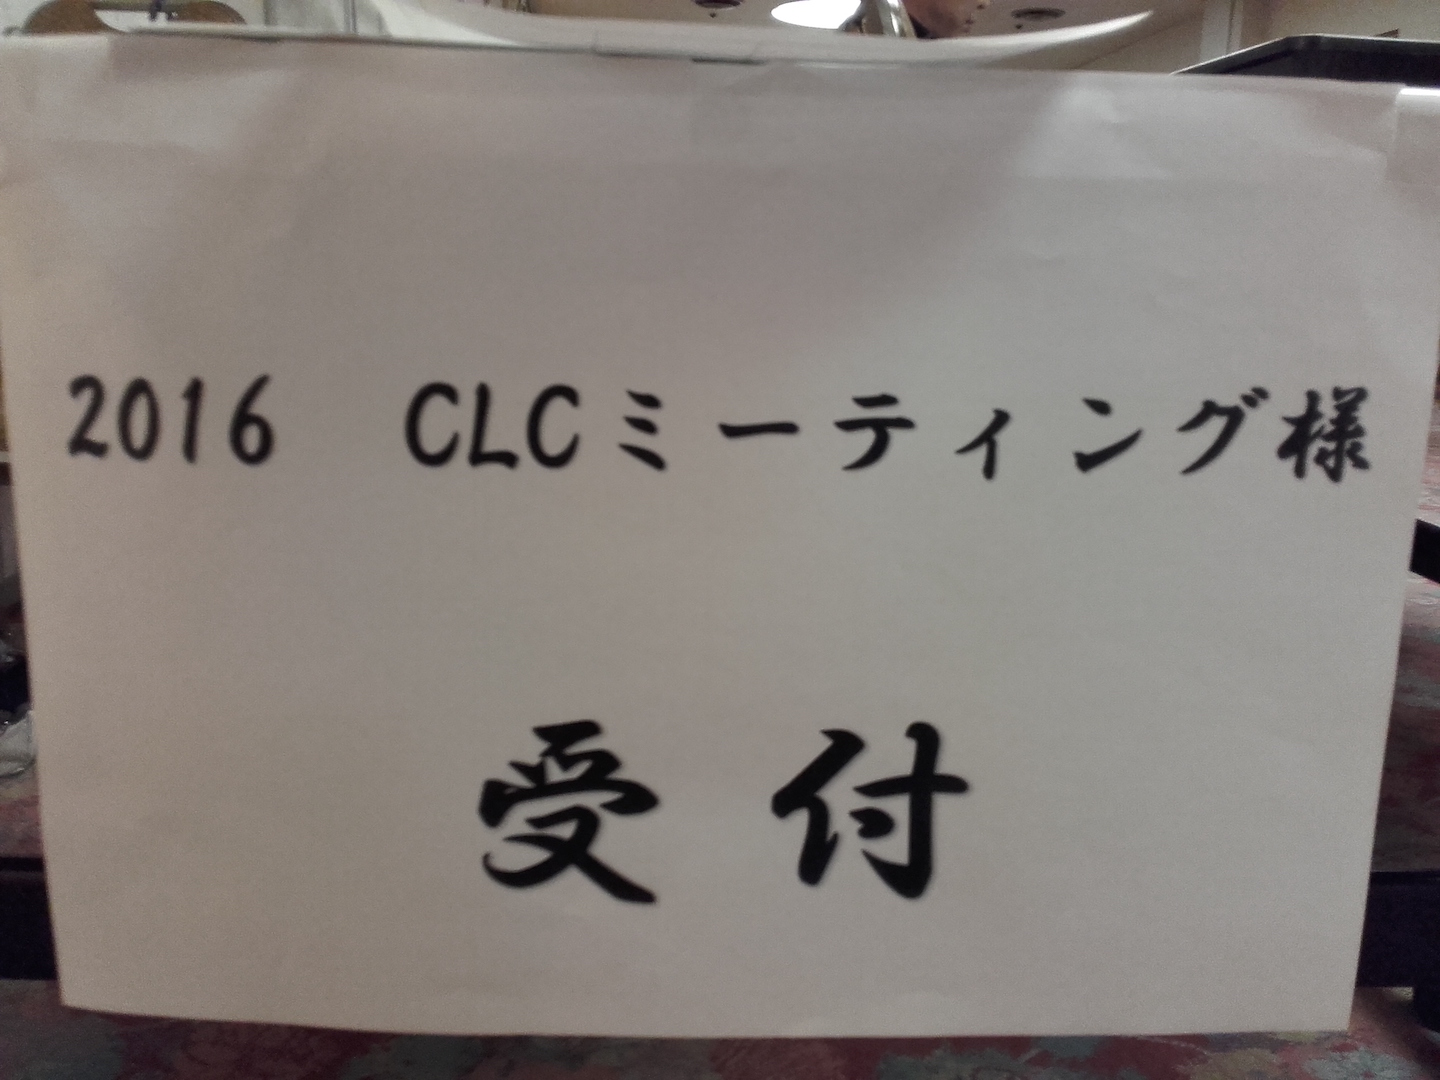 CLC Tesoro Japan 2016